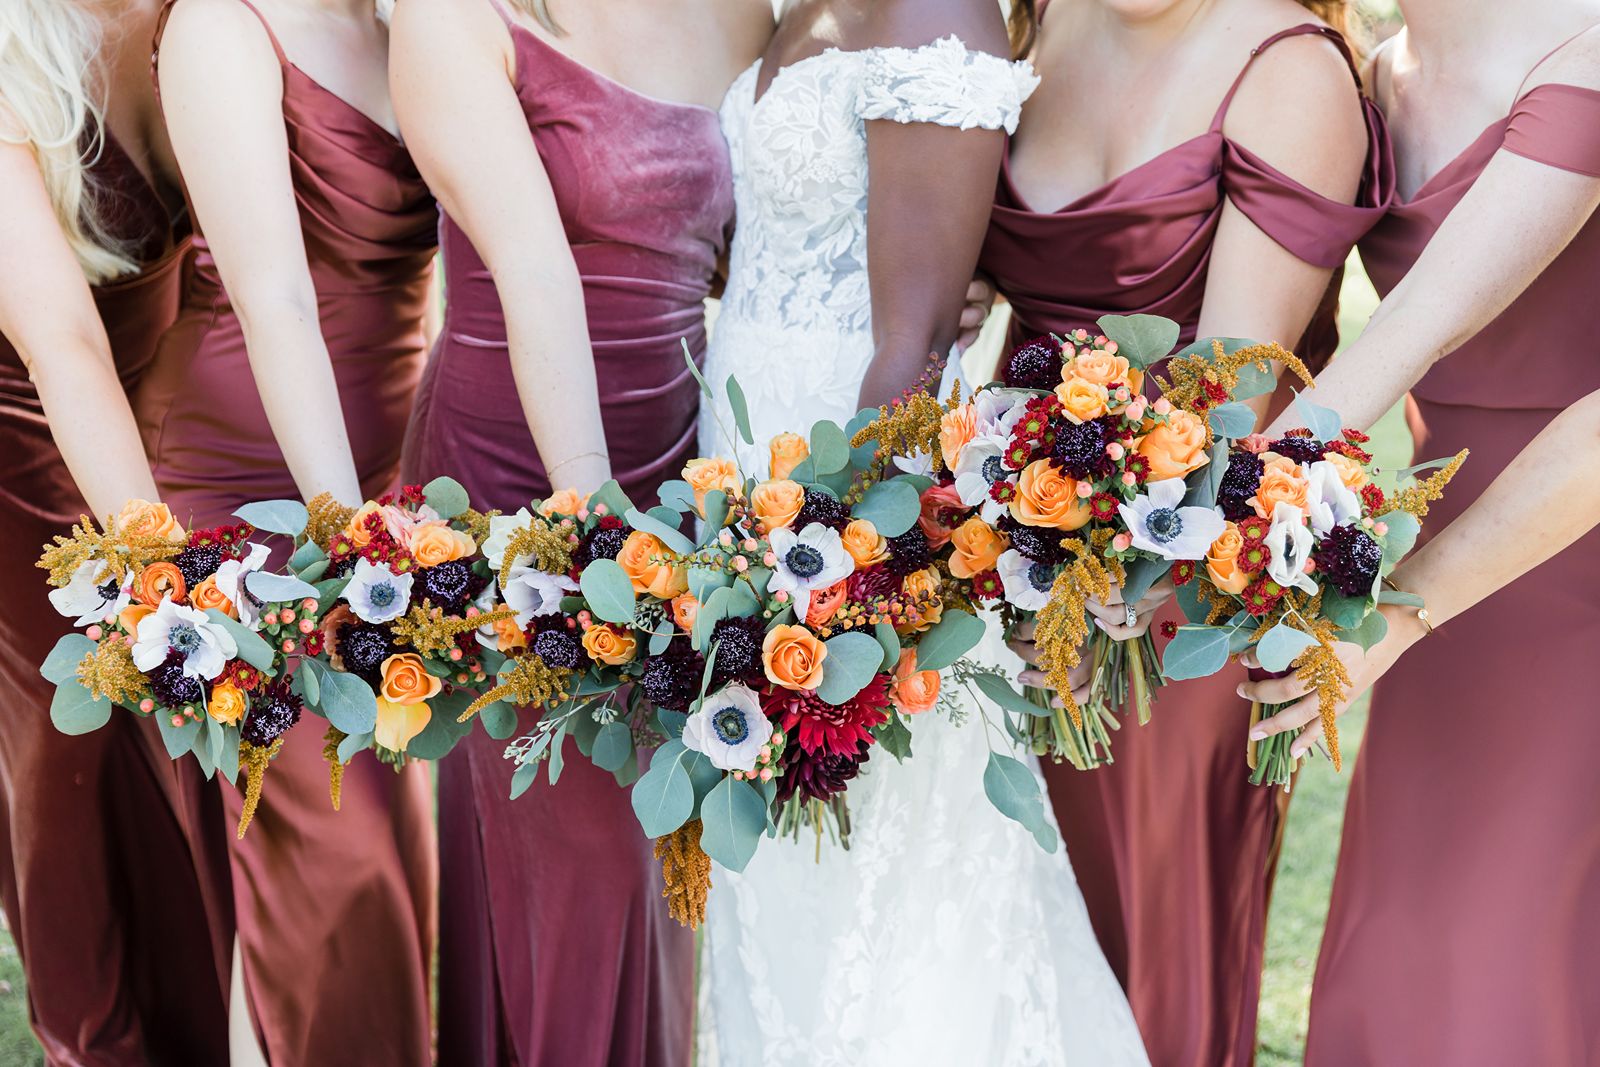 Bride and bridesmaids holding beautiful wedding flowers